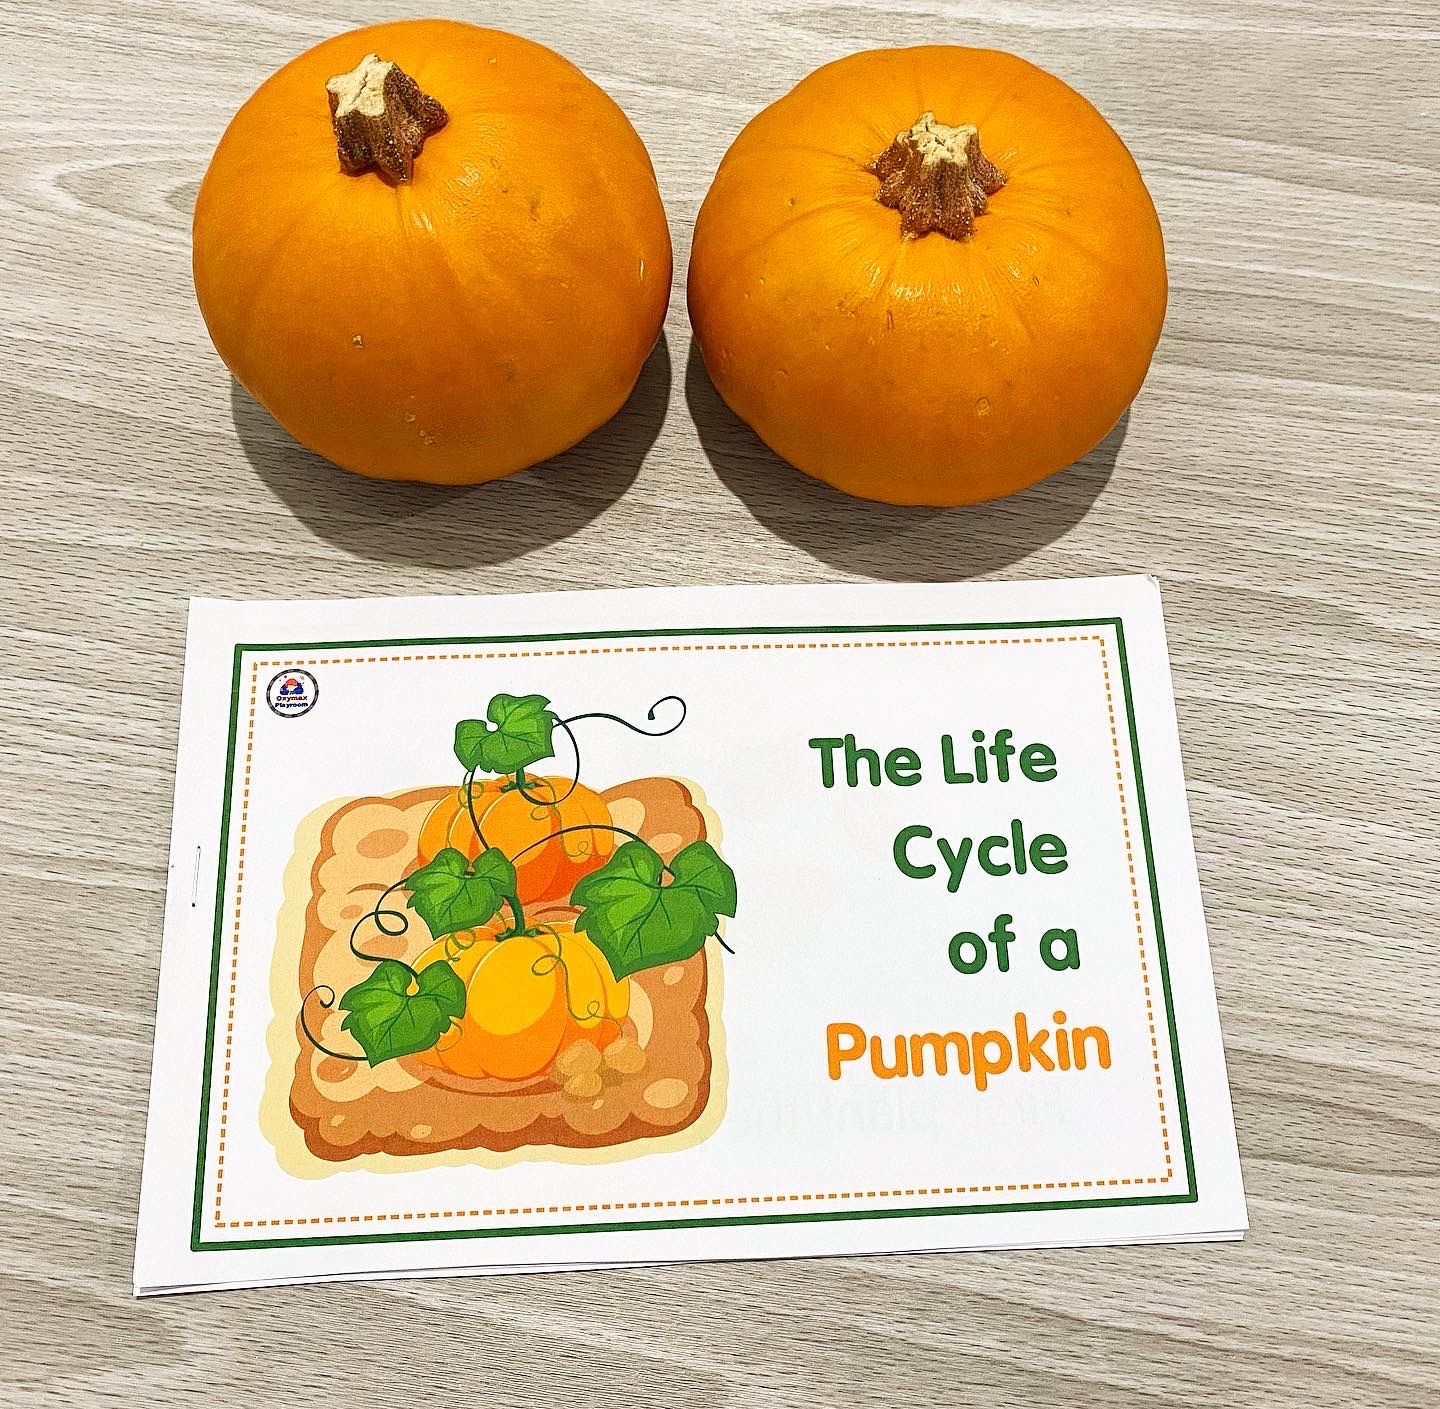 The life cycle of a Pumpkin. EXPLORING THE PARTS OF A PUMPKIN